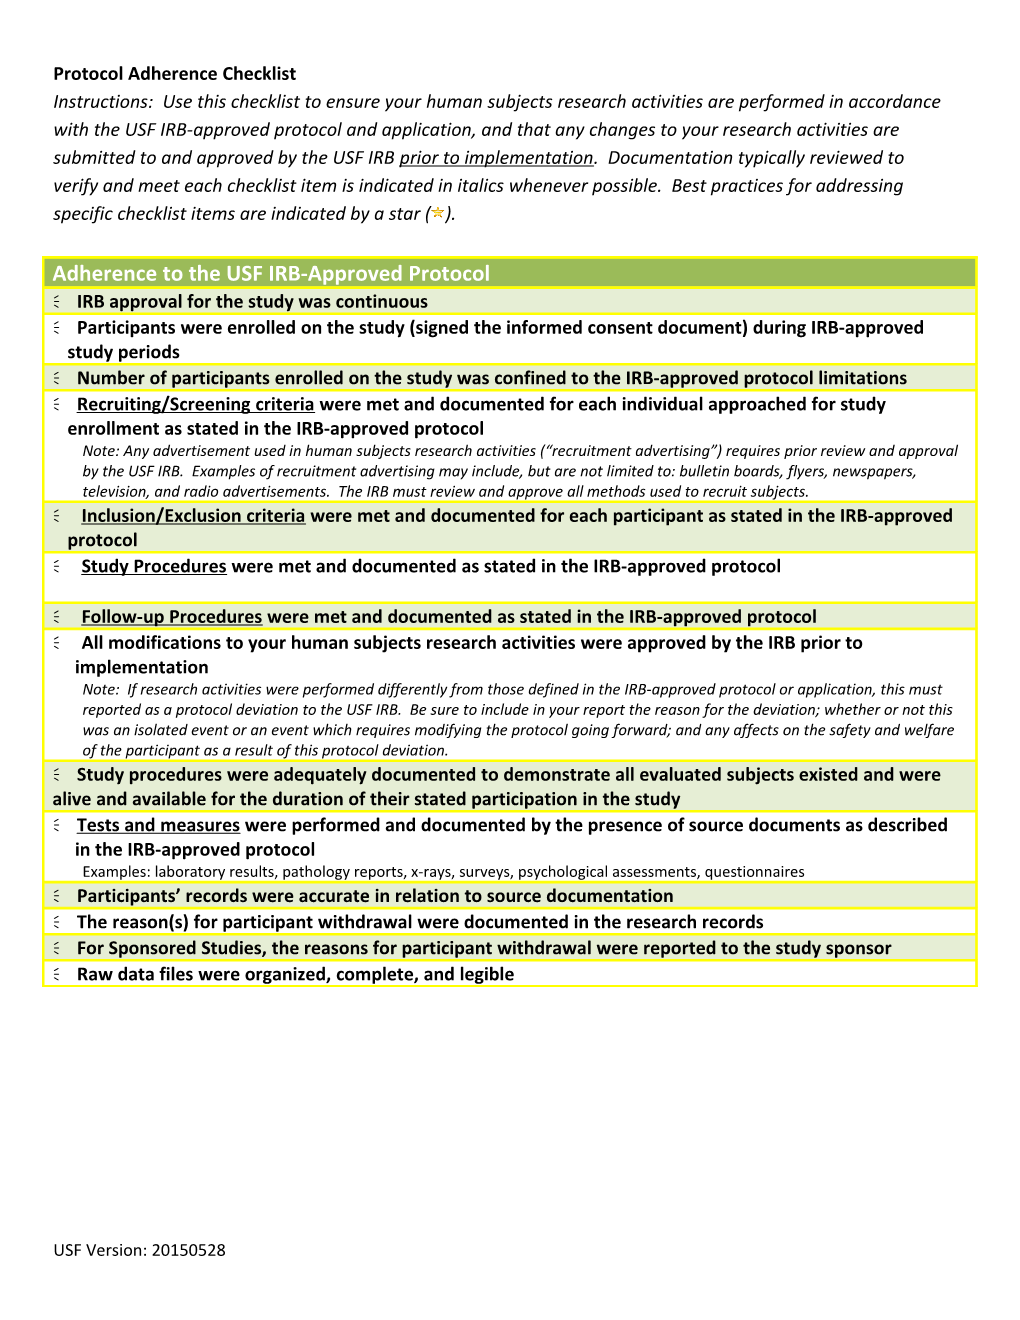 Protocol Adherence Checklist